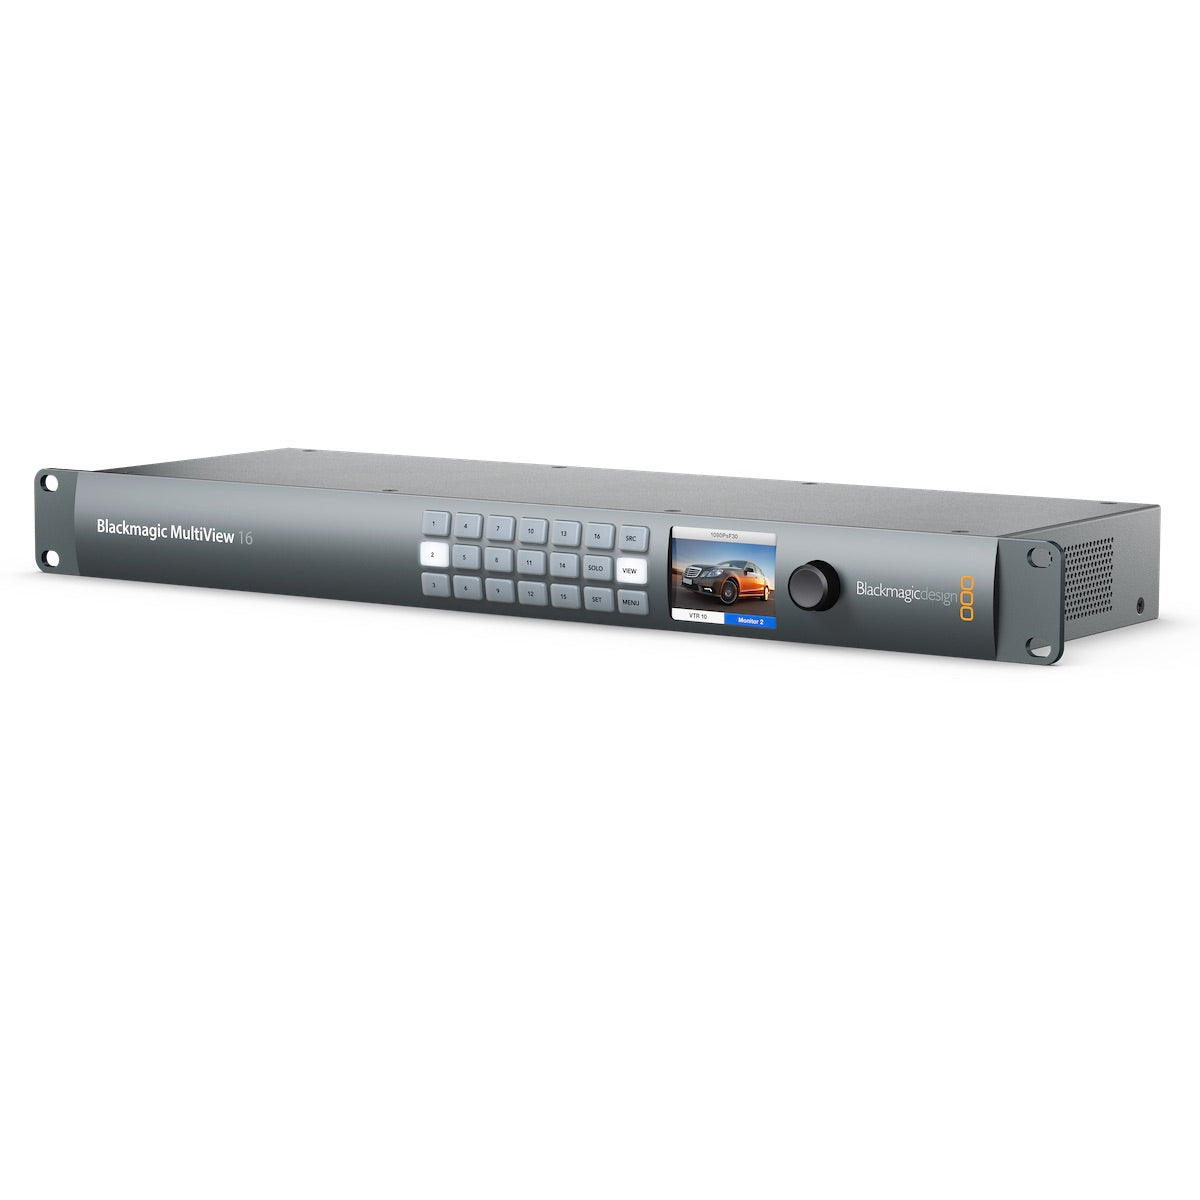 Blackmagic Design MultiView 16 - Ultra HD 16 Source Video Monitor, angle